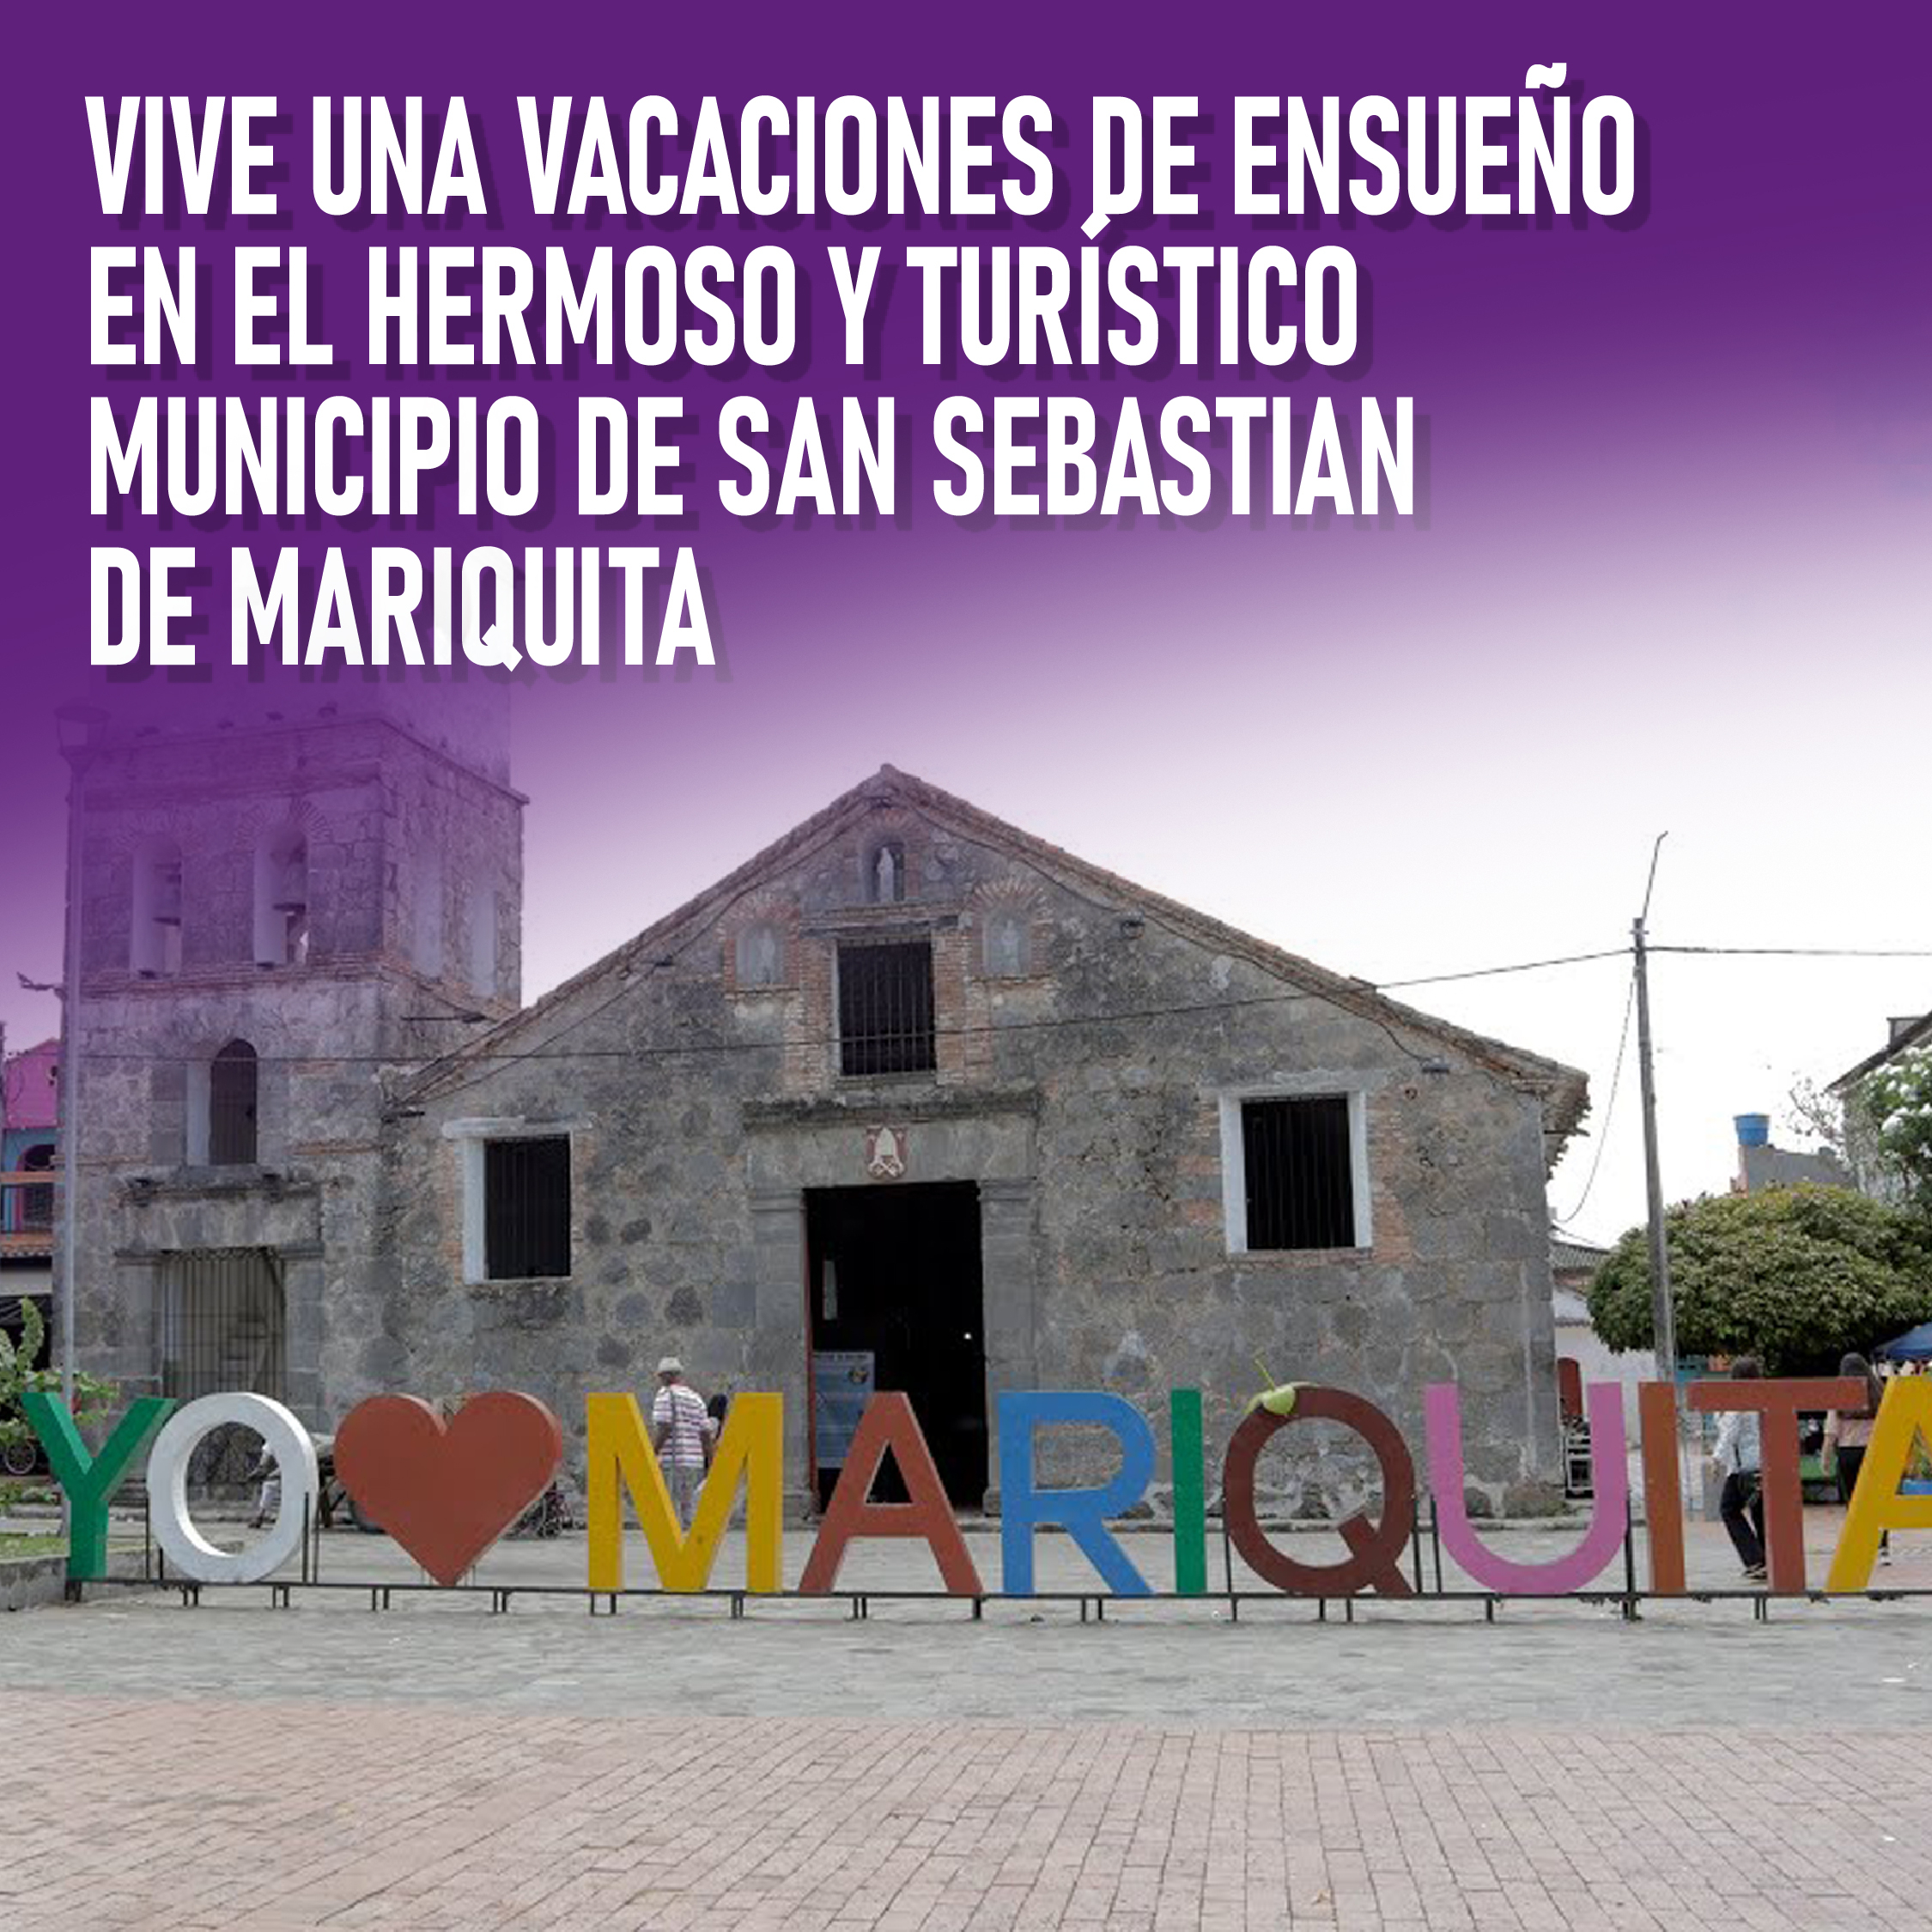 Alquiler de Carros en Ibagué - Visita San Sebastian de Mariquita